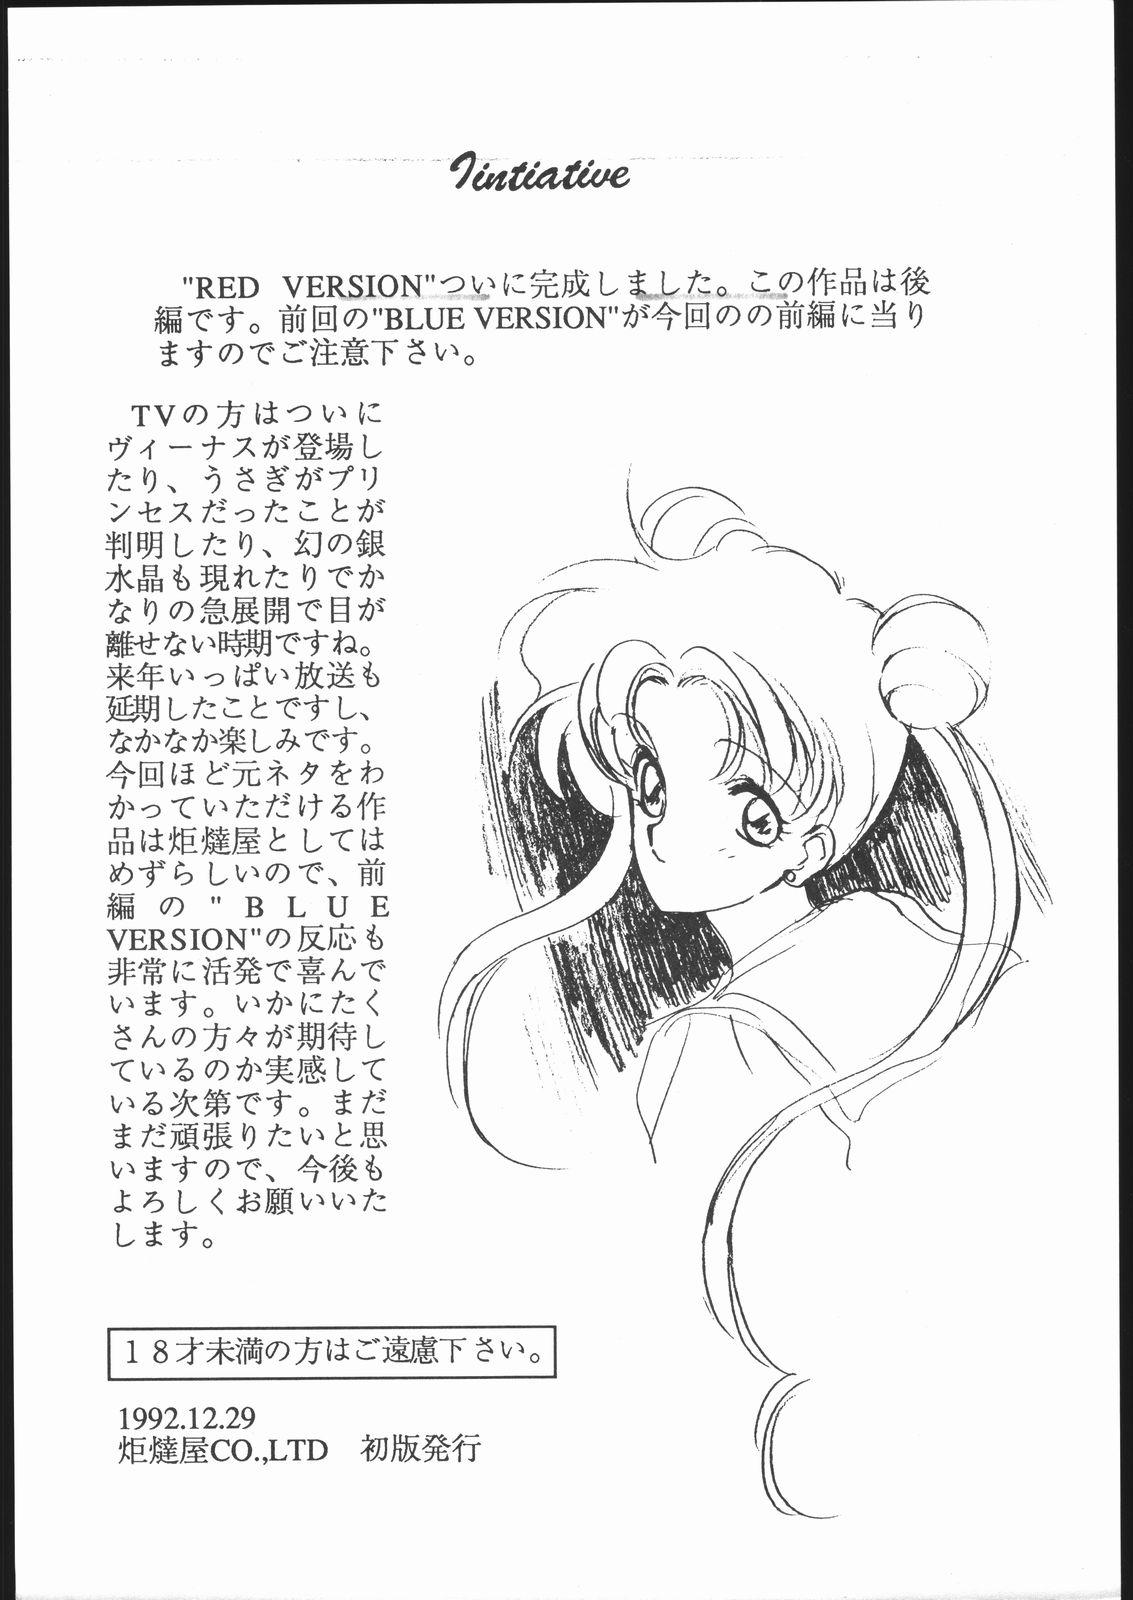 Bunduda SAILORS RED VERSION - Sailor moon Sislovesme - Page 2